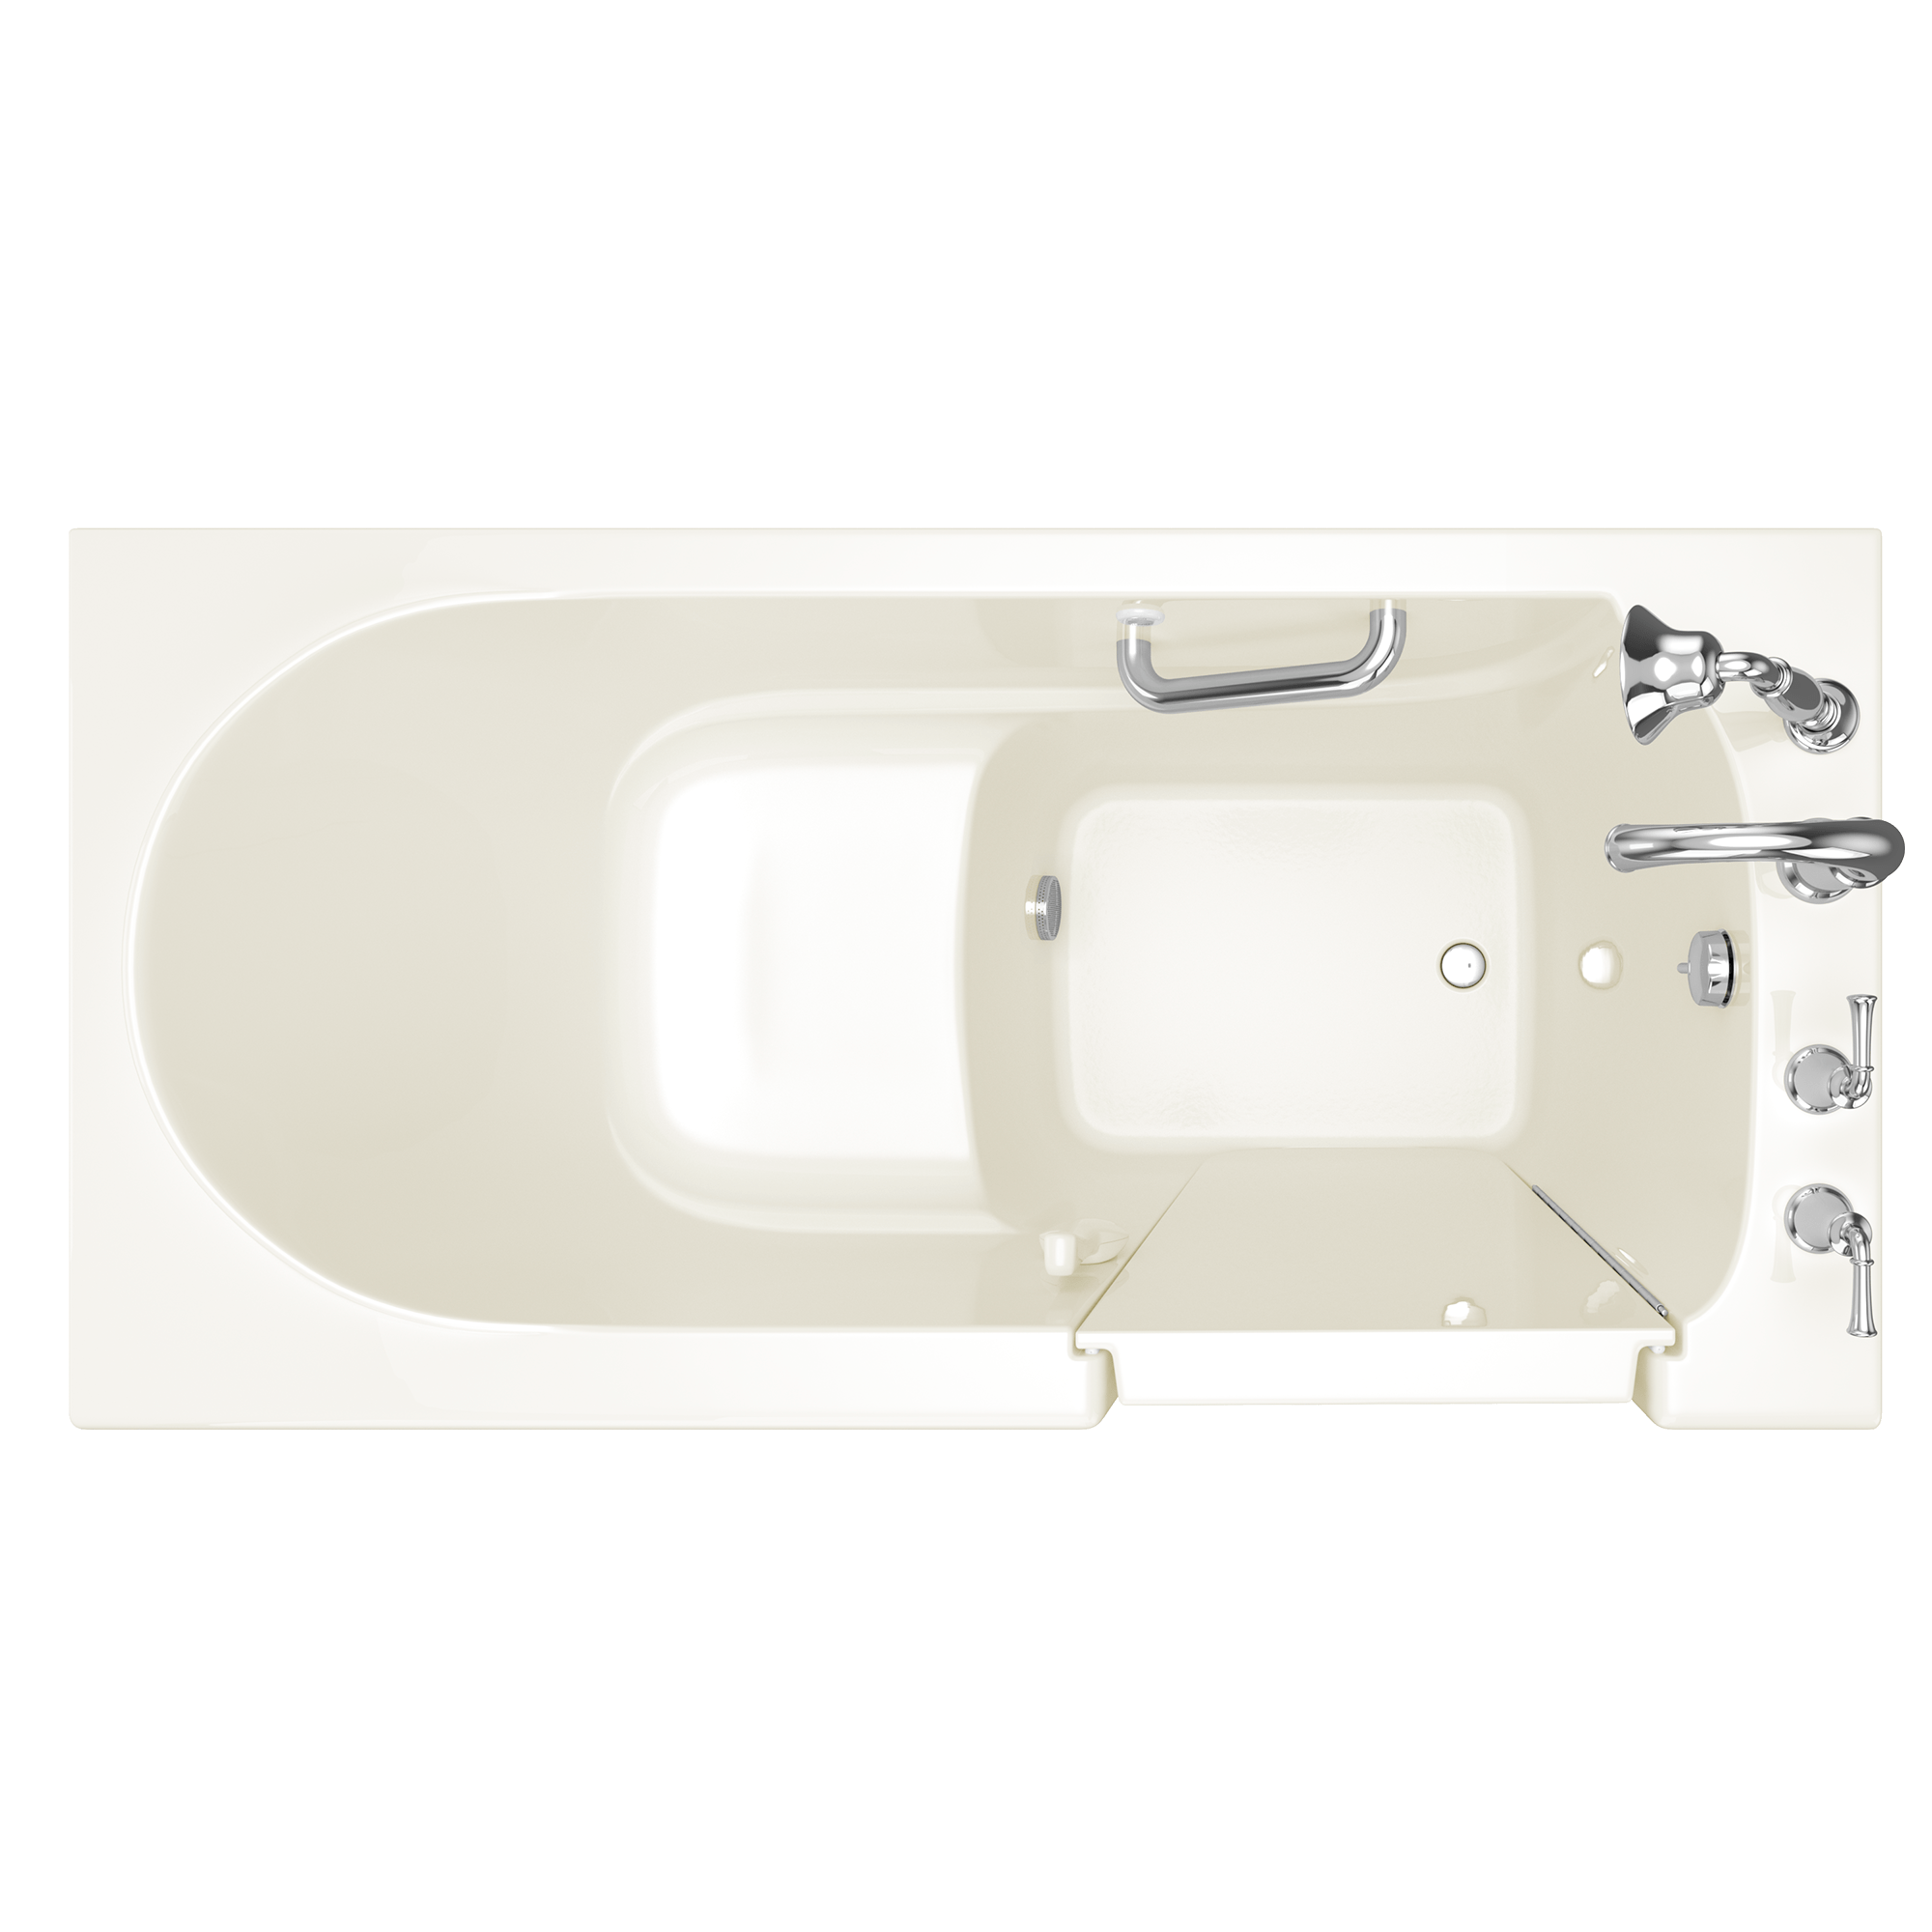 Gelcoat Value Series 30x60 Inch Soaking Walk-In Bathtub - Right Hand Door and Drain